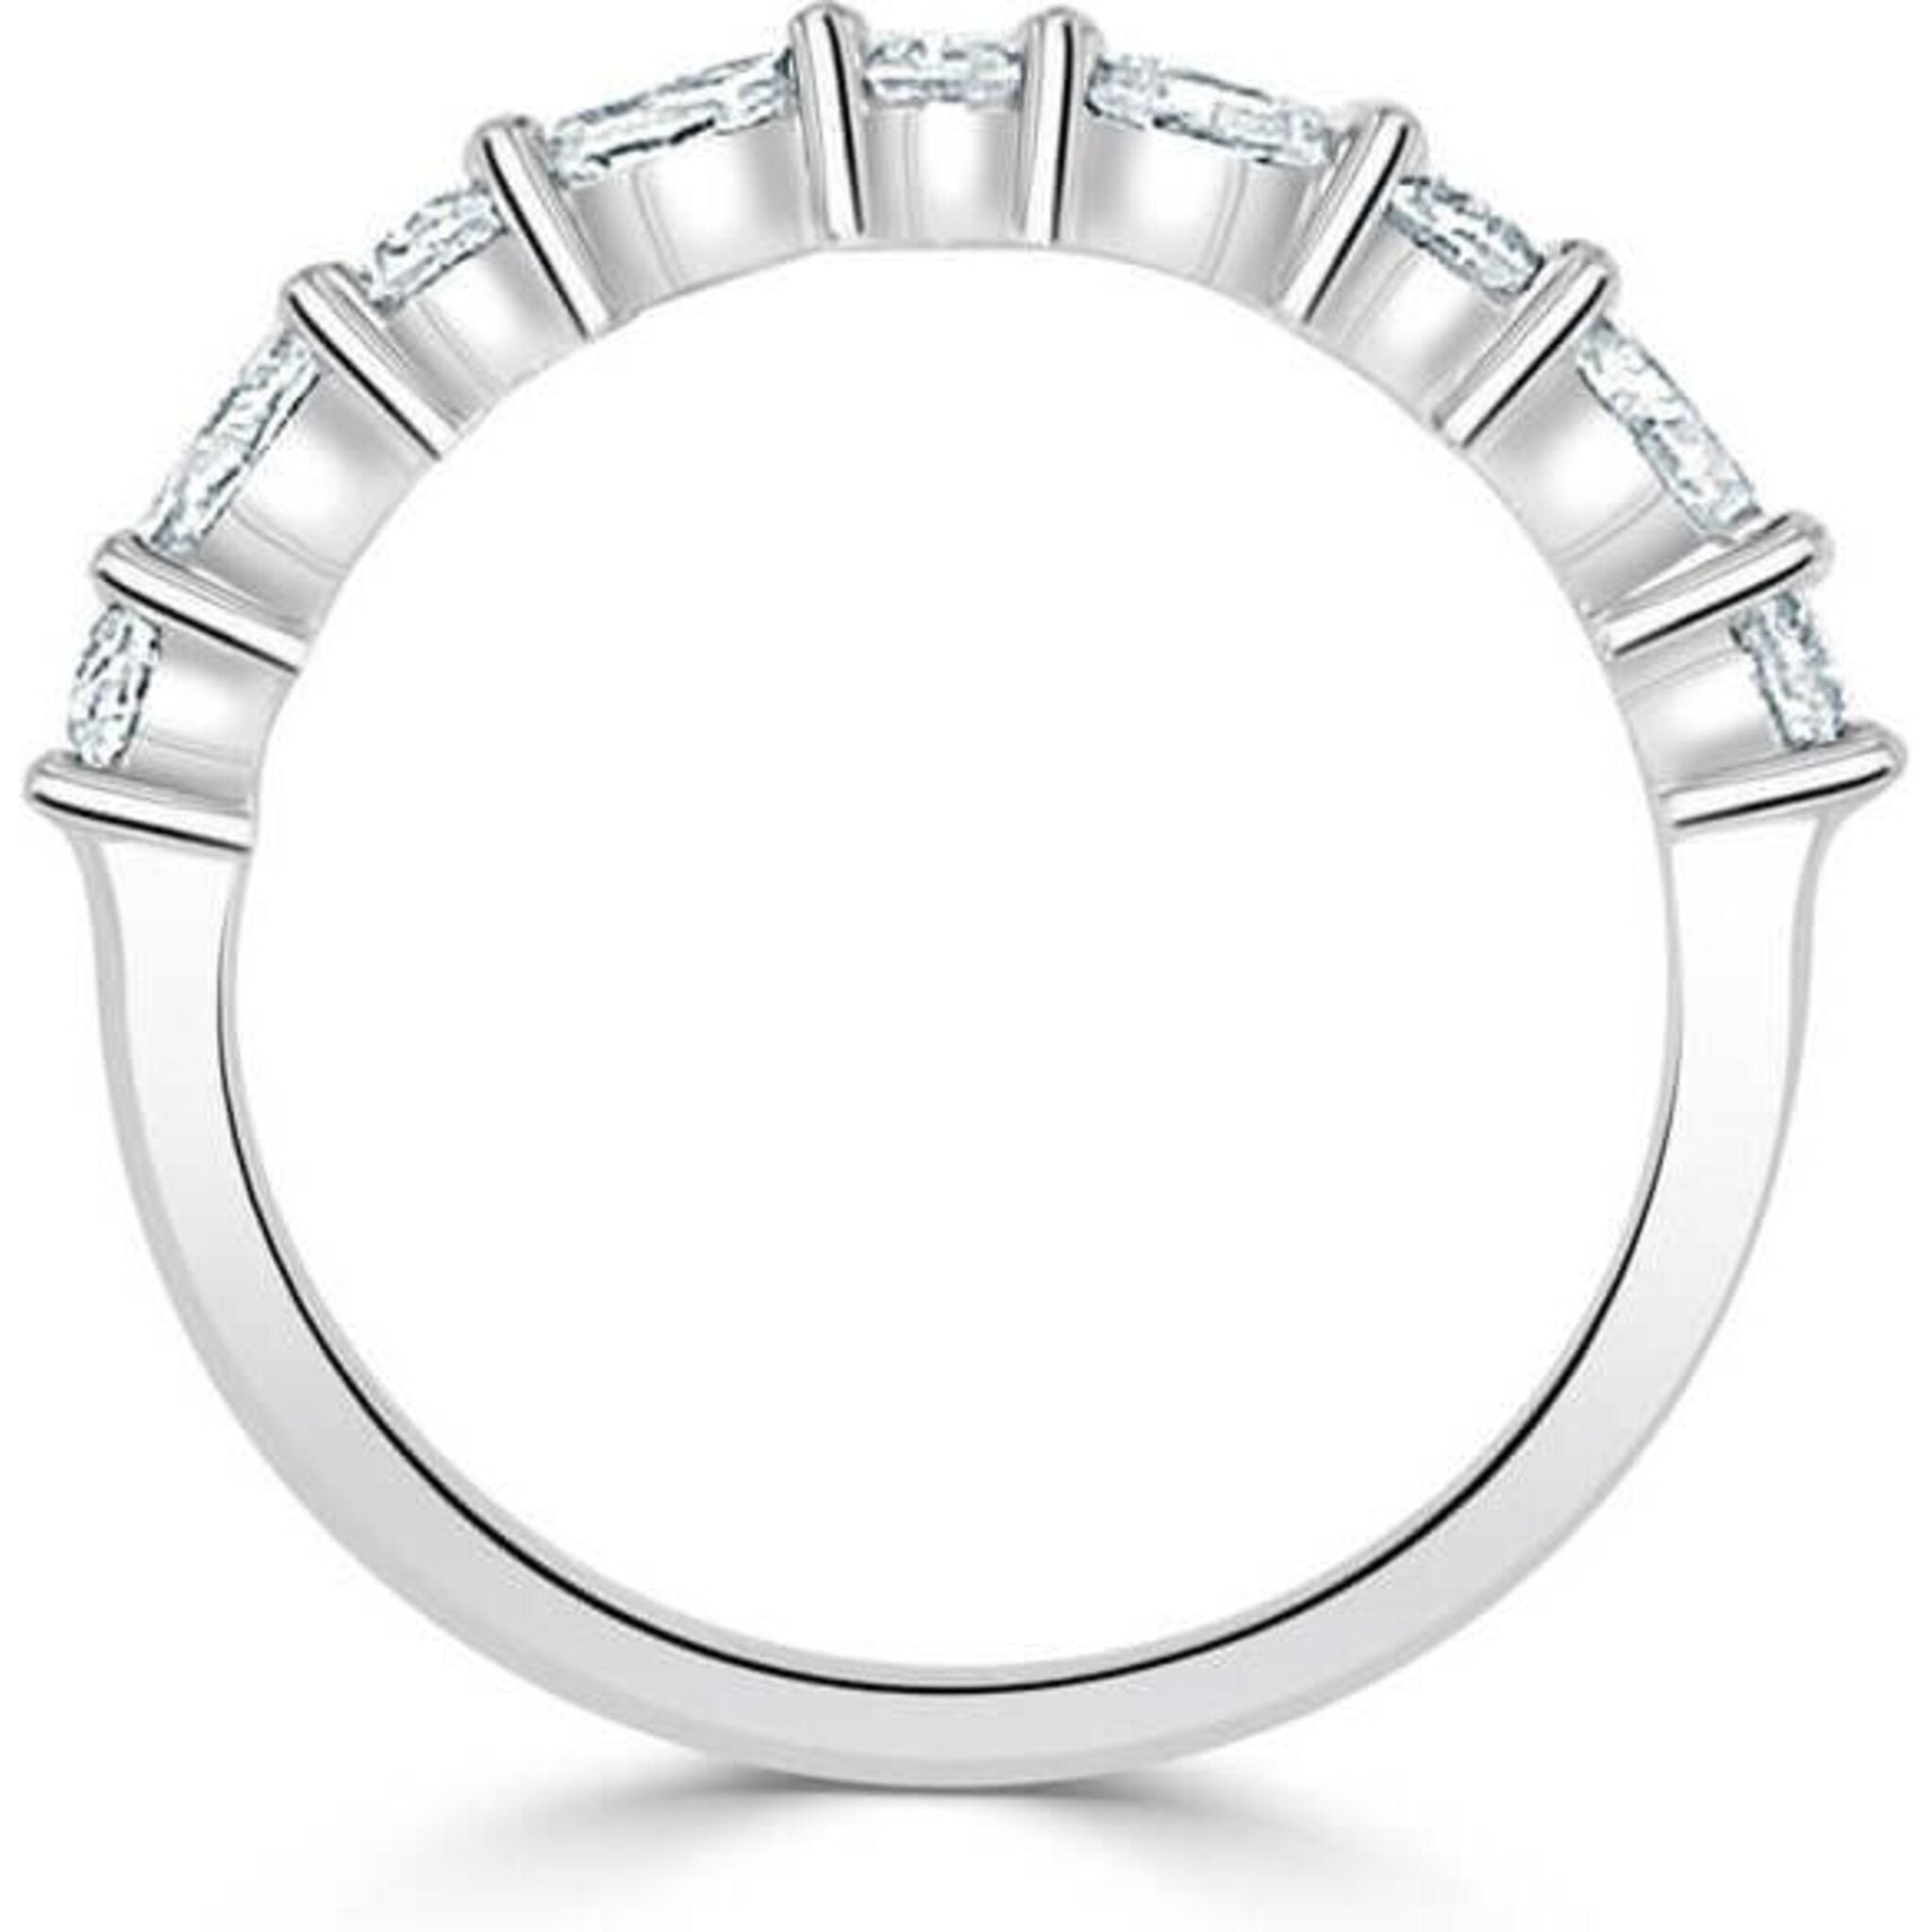 Imagine Bridal - Diamond Ring Guard